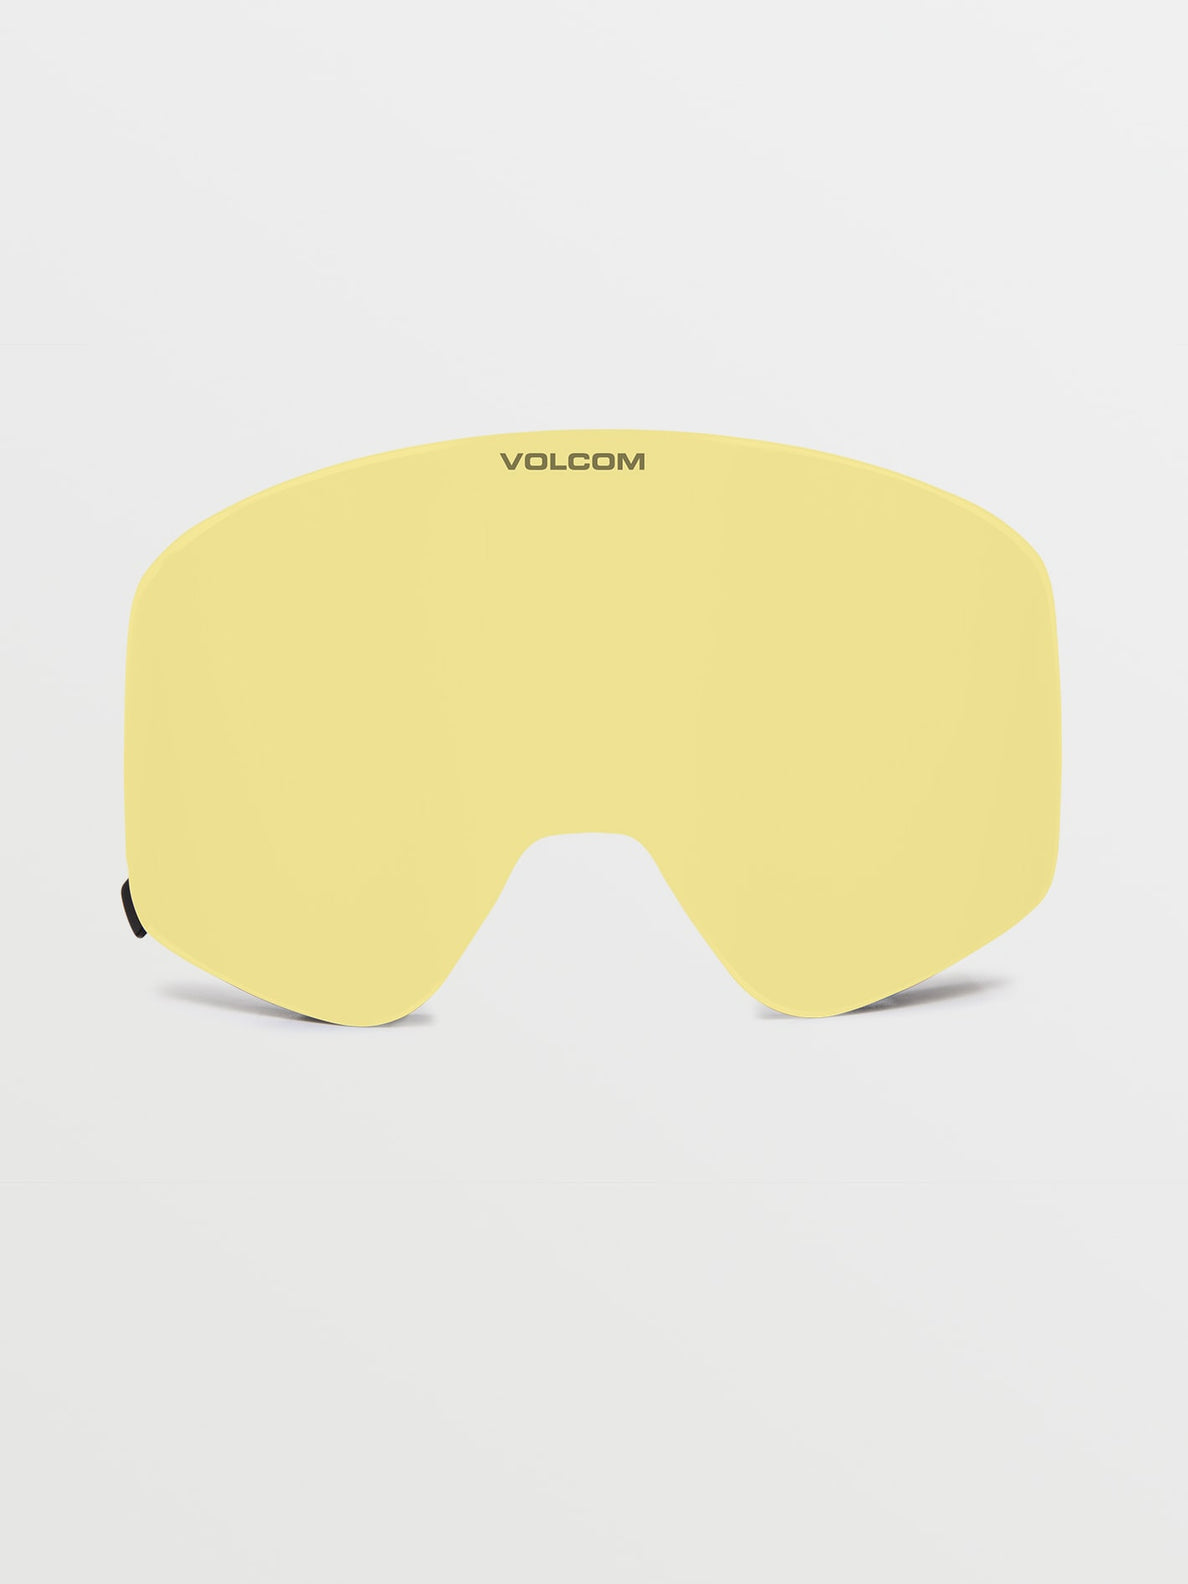 Odyssey Goggle - Matte White / Pink Chrome